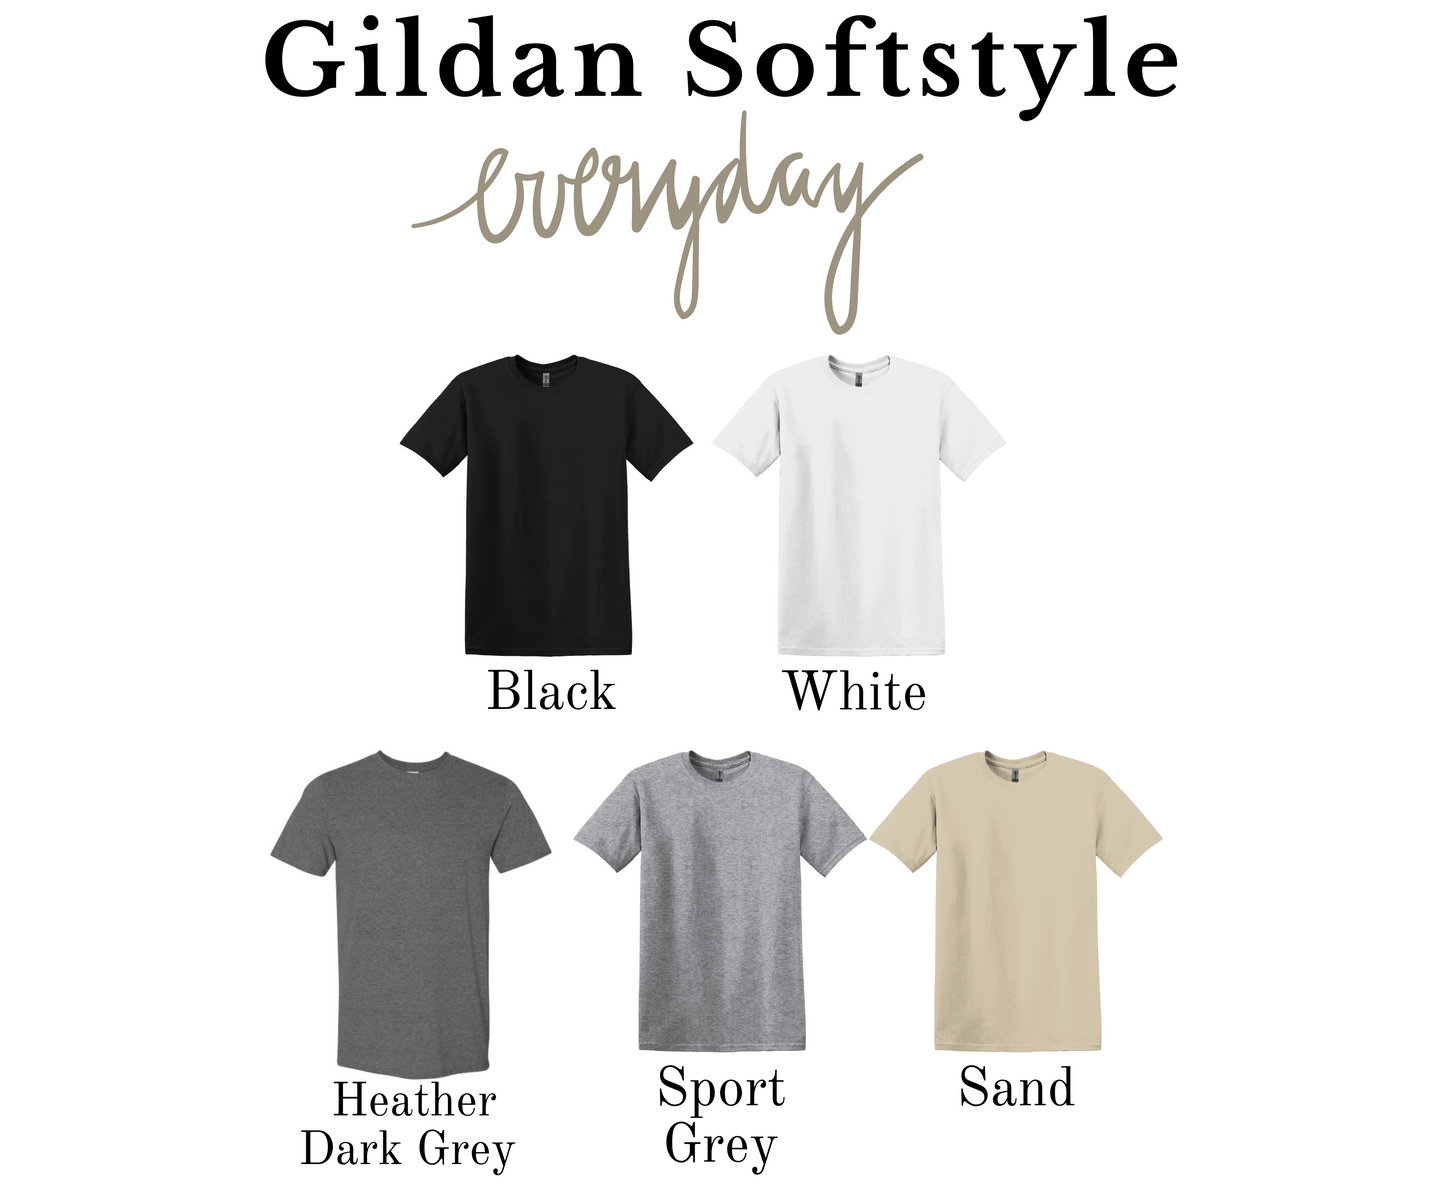 In my Auntie Era Gildan Softstyle Sweatshirt or T-shirt